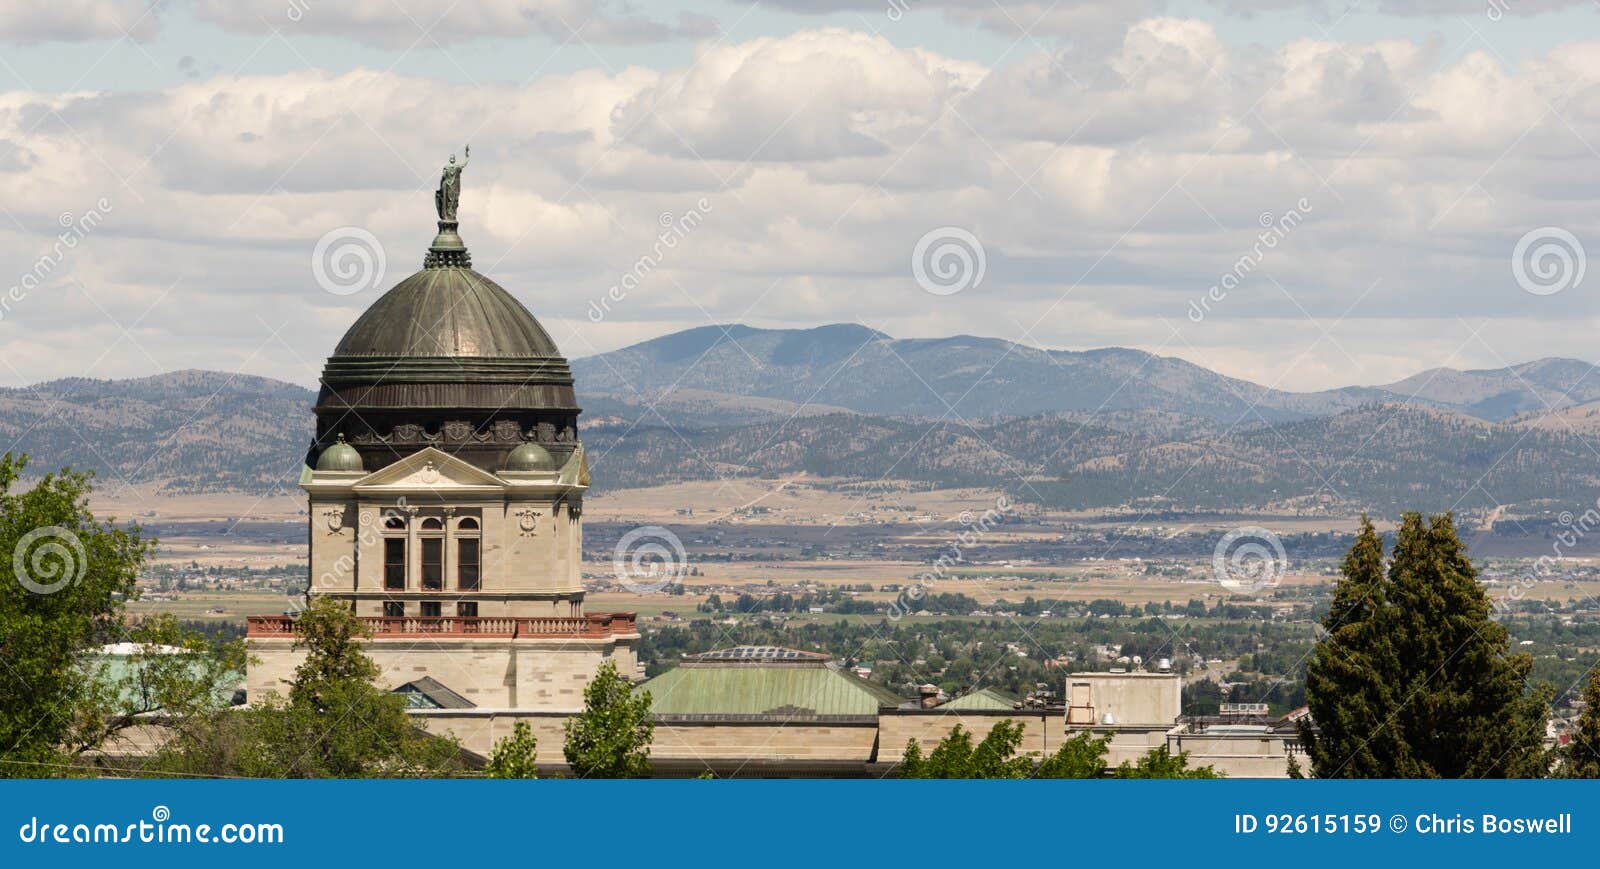 panoramic view capital dome helena montana state building